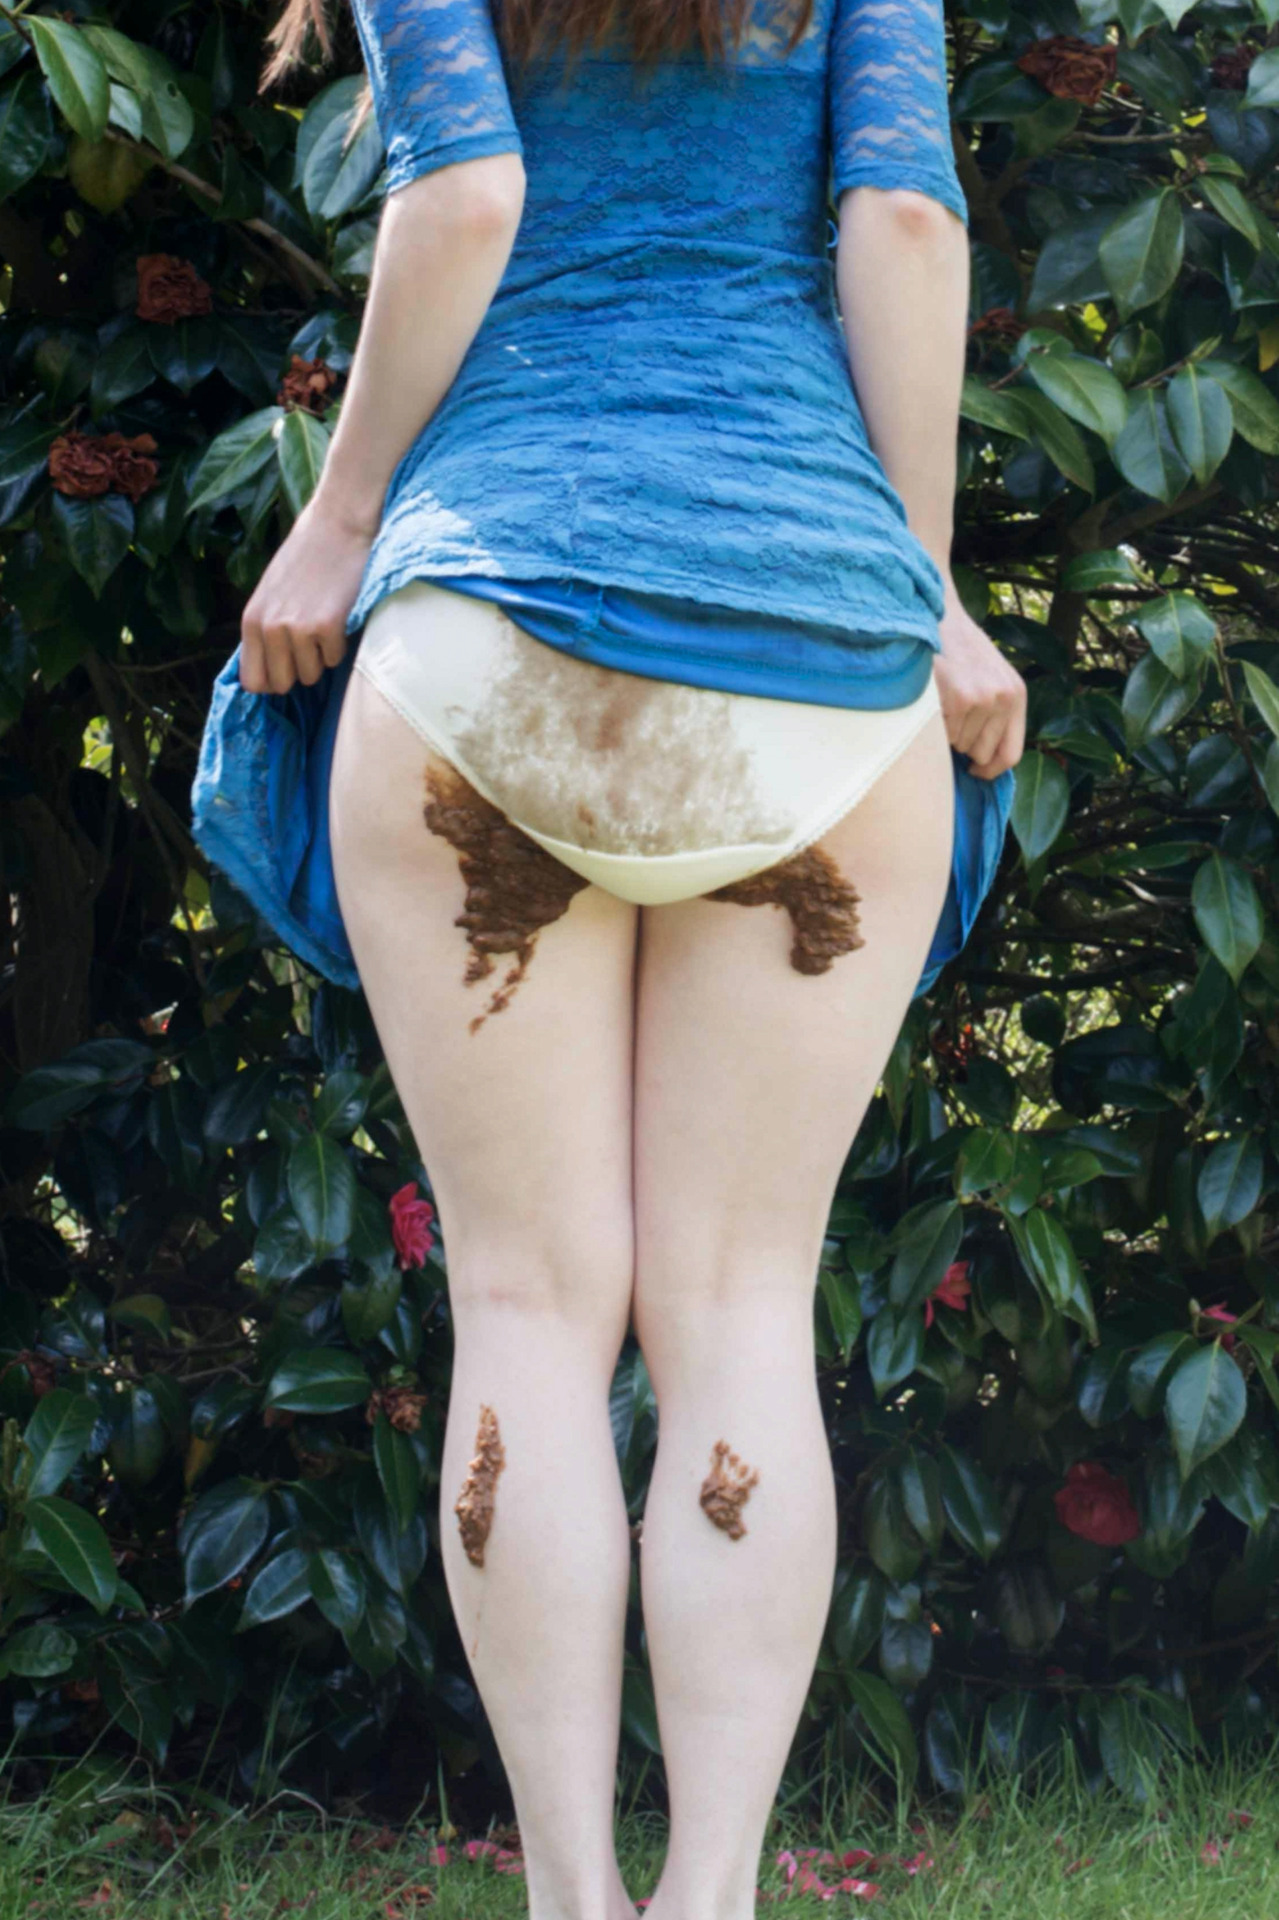 angela thomas jones recommends public panty poop tumblr pic